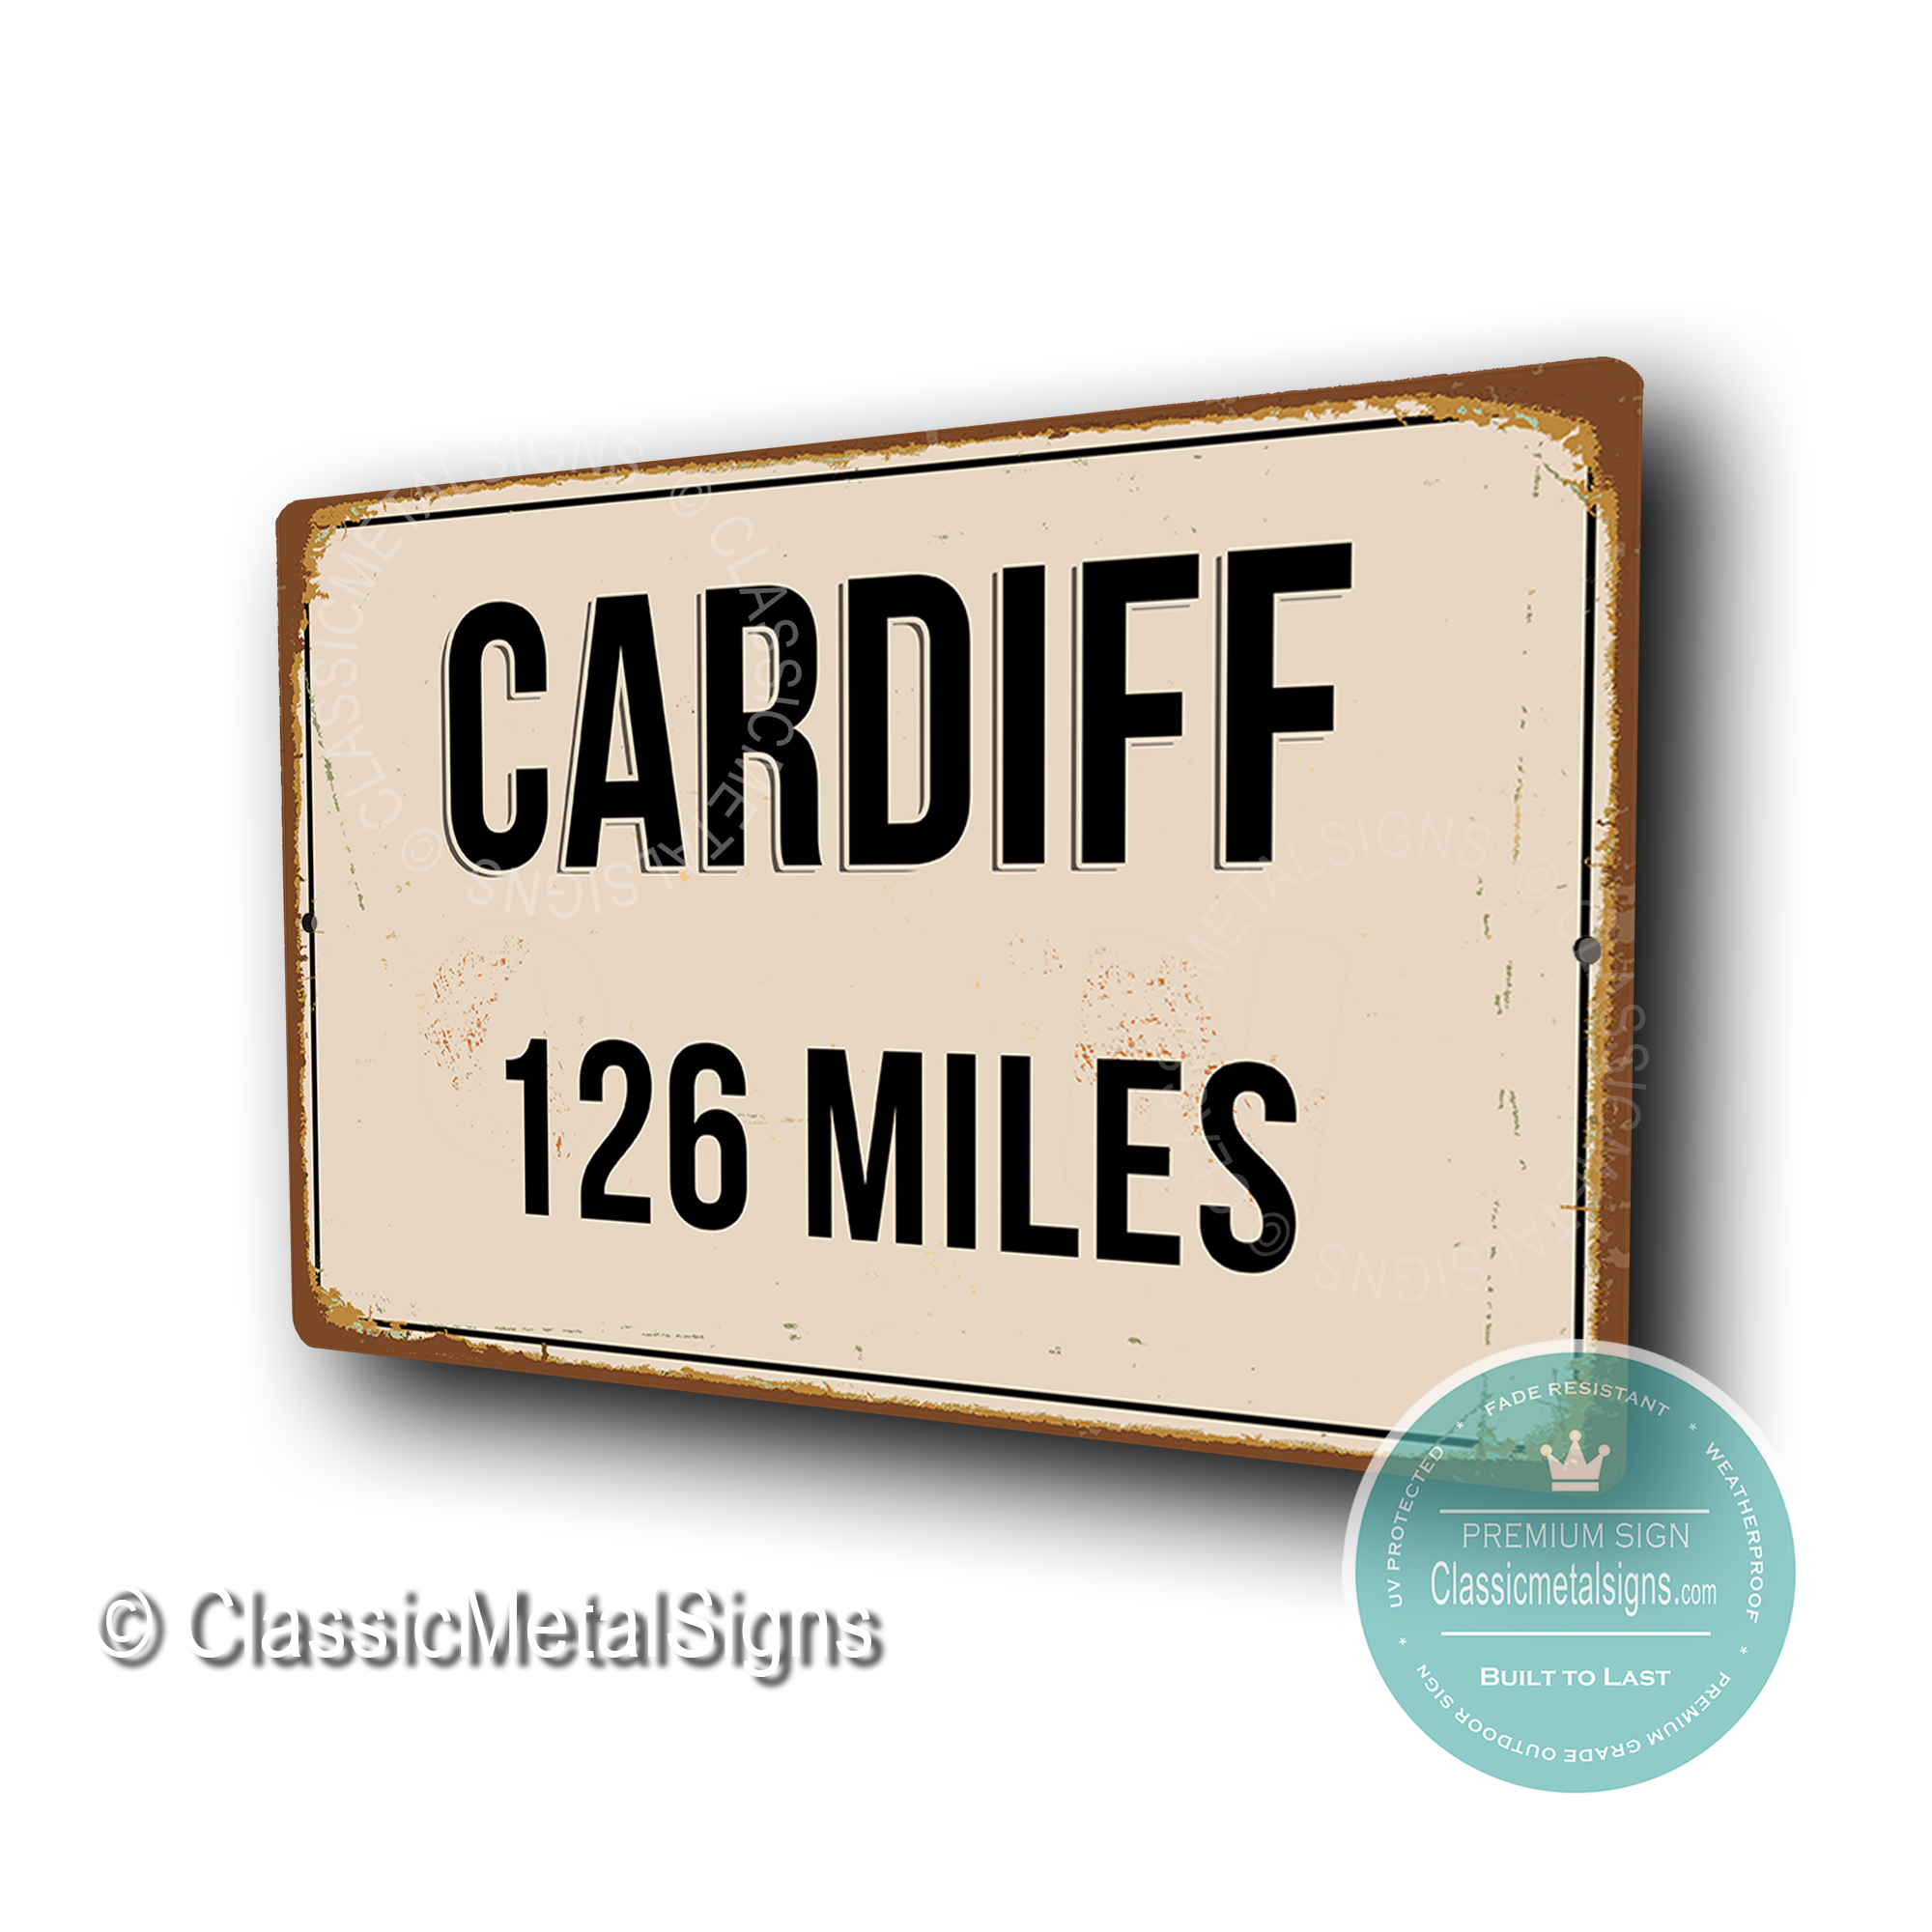 Cardiff Street Sign